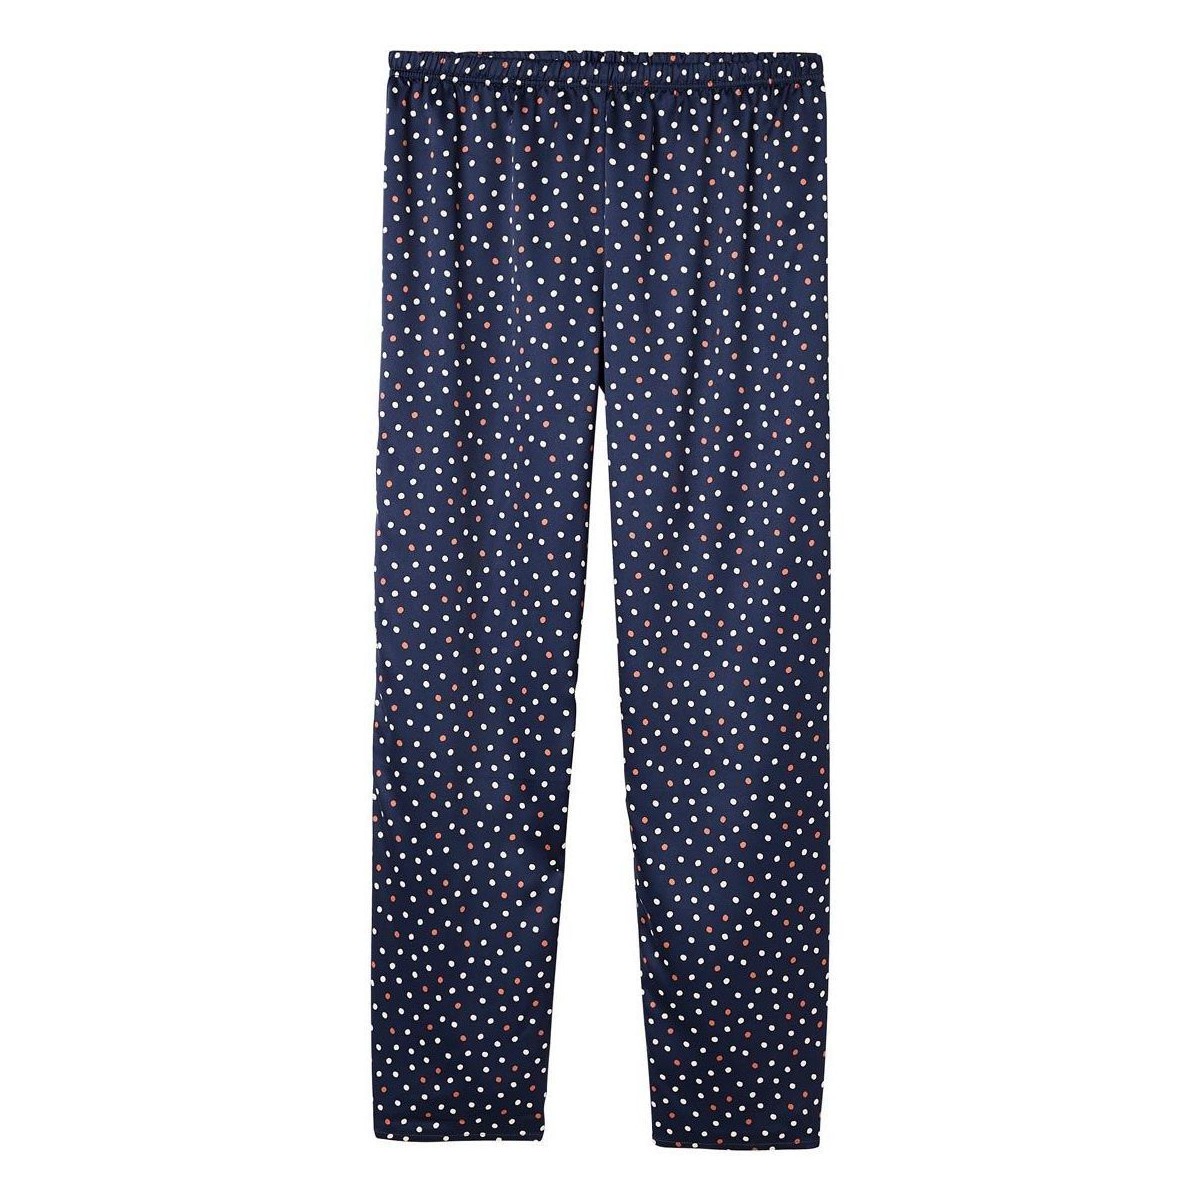 Vêtements Femme Pyjamas / Chemises de nuit Pomm'poire Pantalon de pyjama bleu Brooklyn Bleu